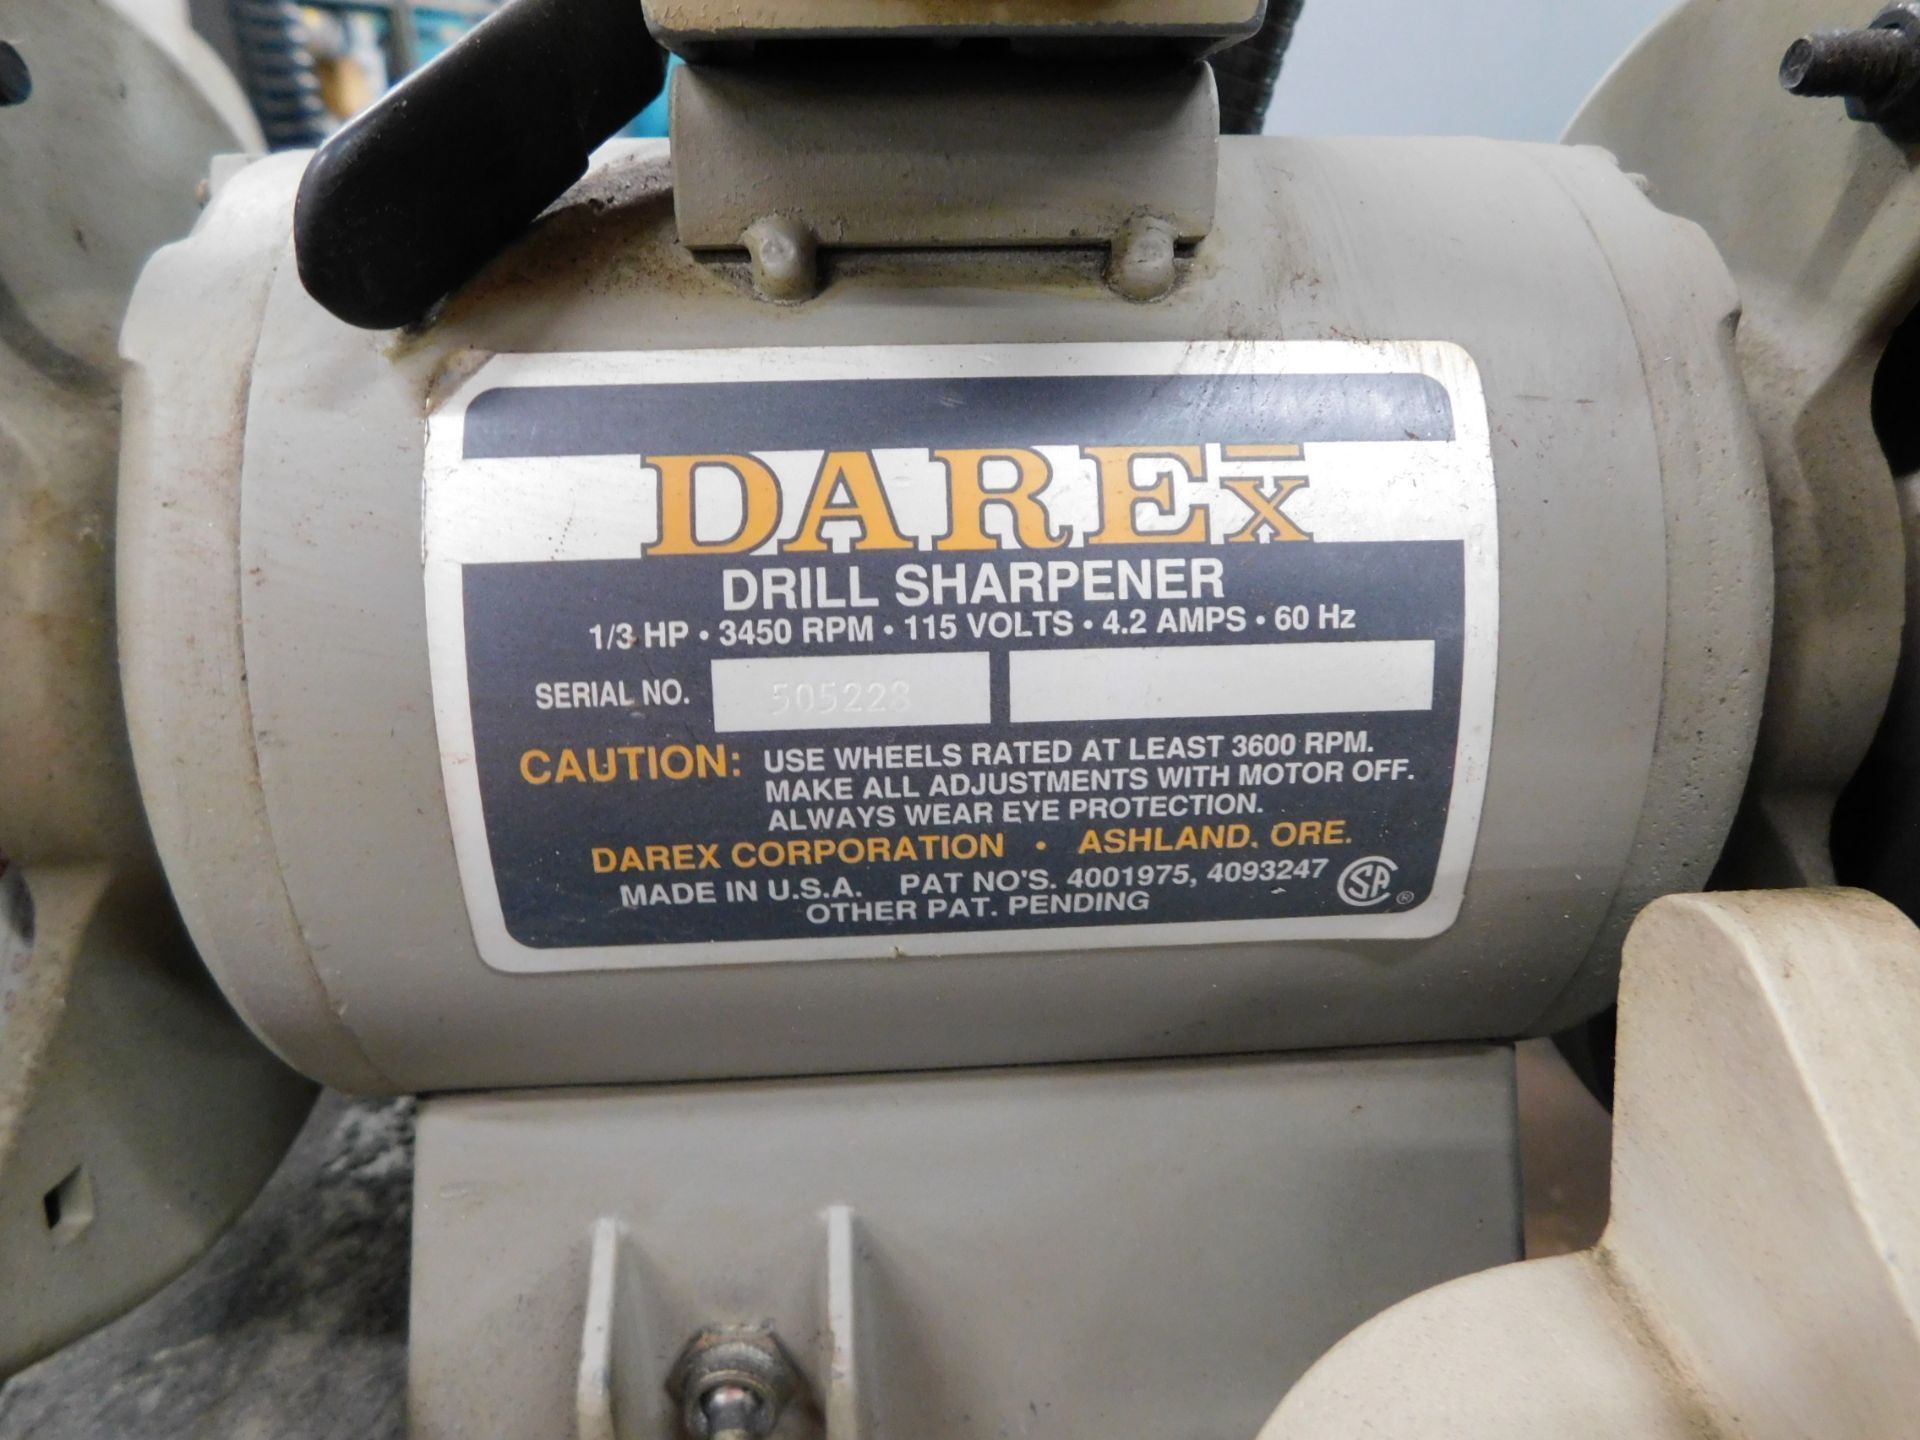 Darex Drill Sharpener, s/n 505228 - Image 3 of 4